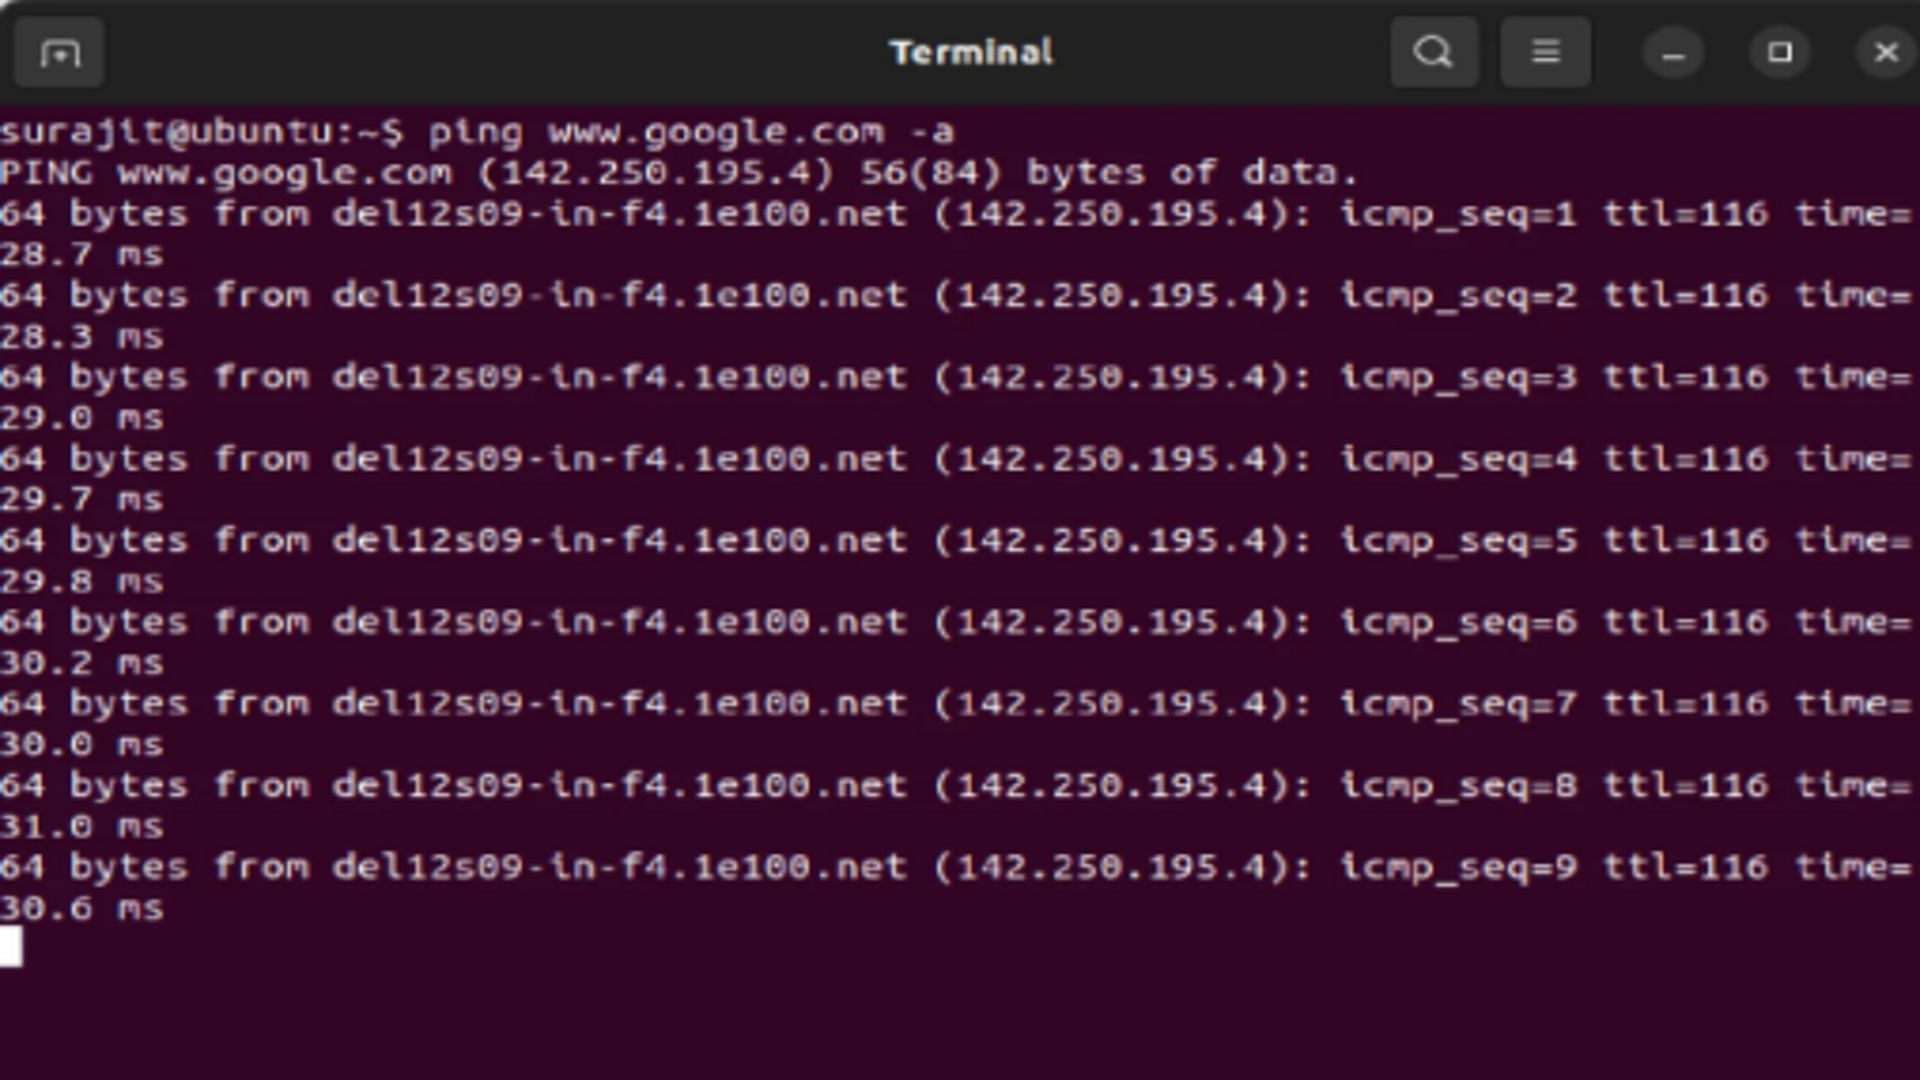 ping command (Image via Ubuntu)